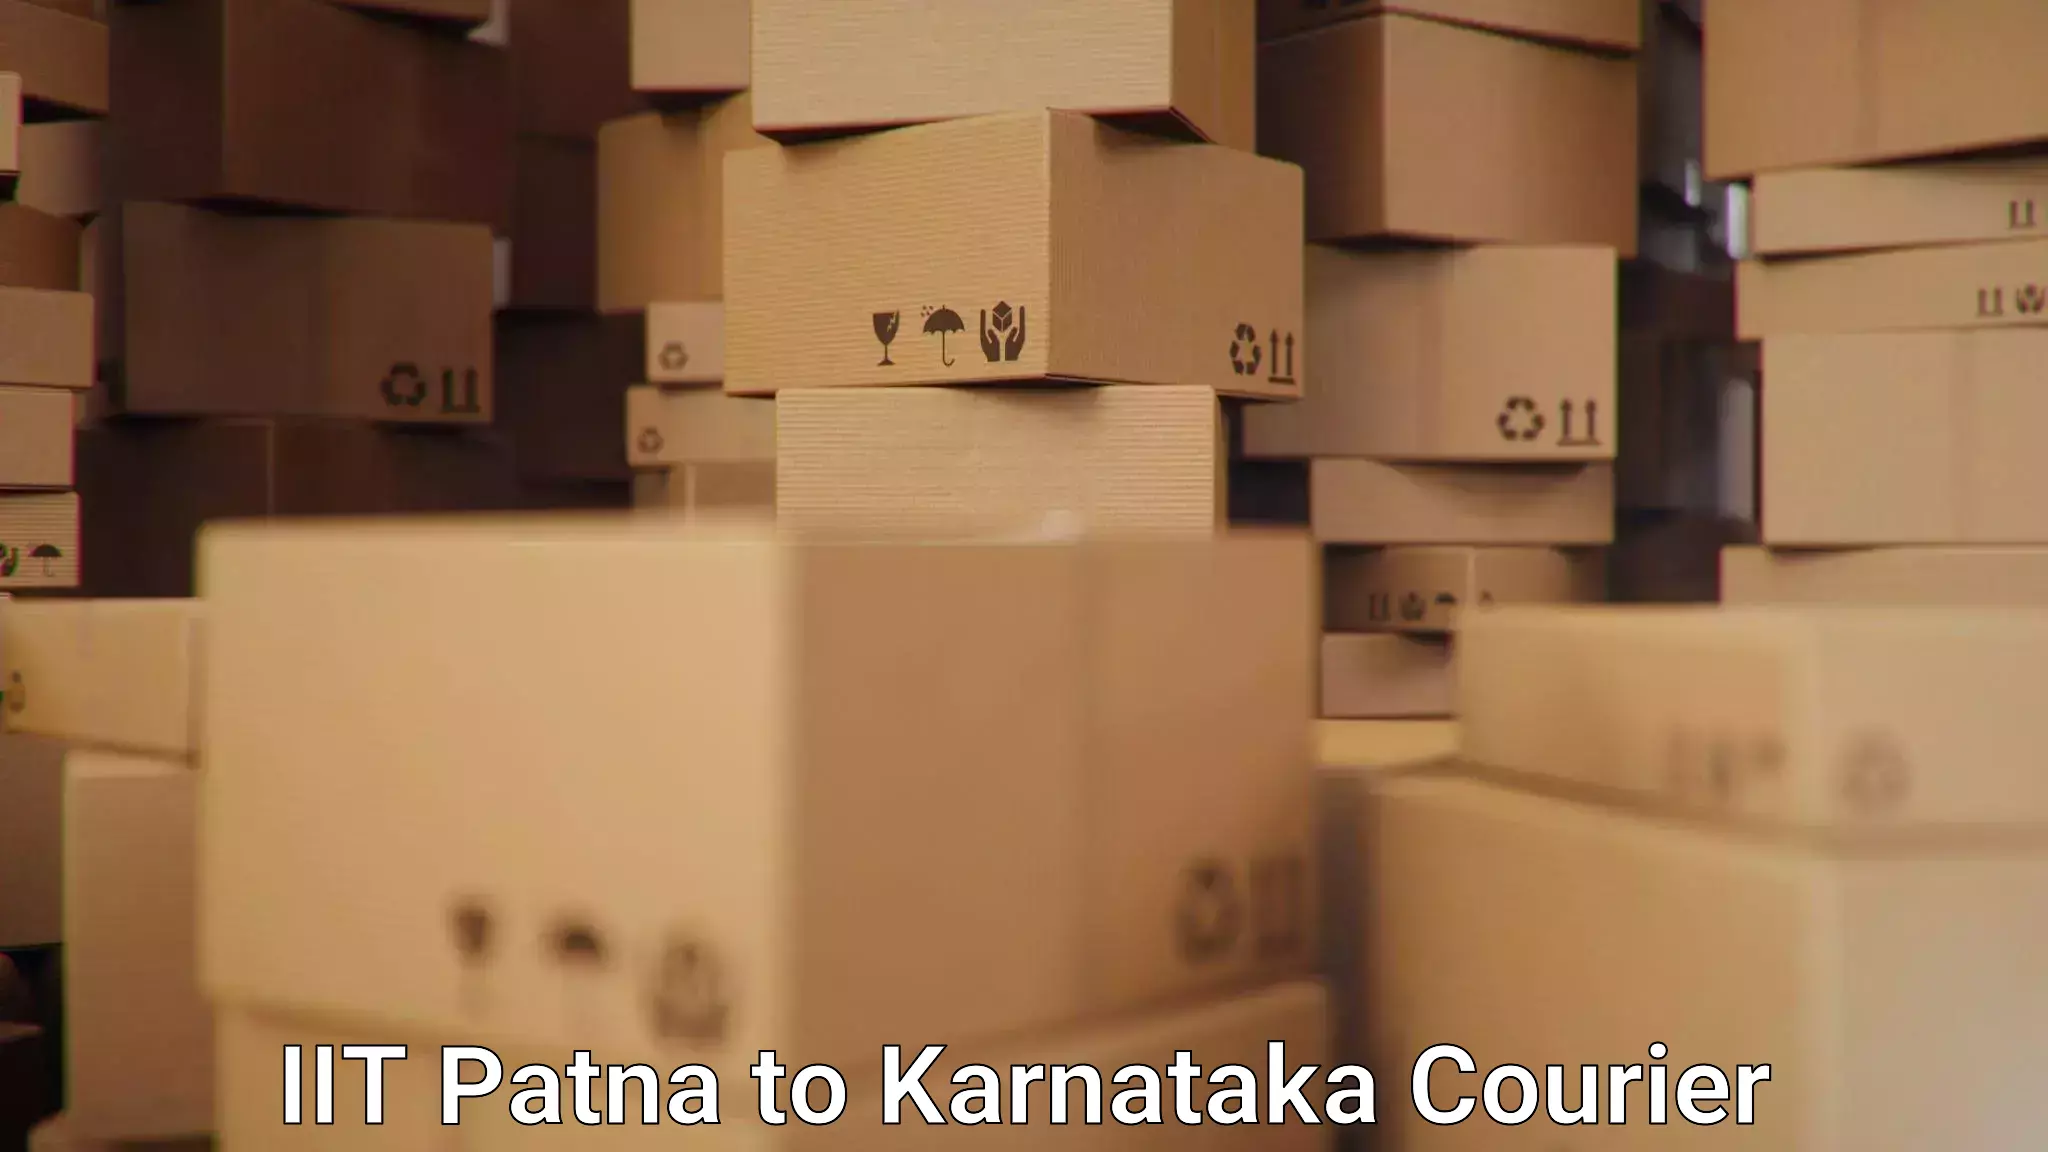 Parcel service for businesses IIT Patna to Karnataka